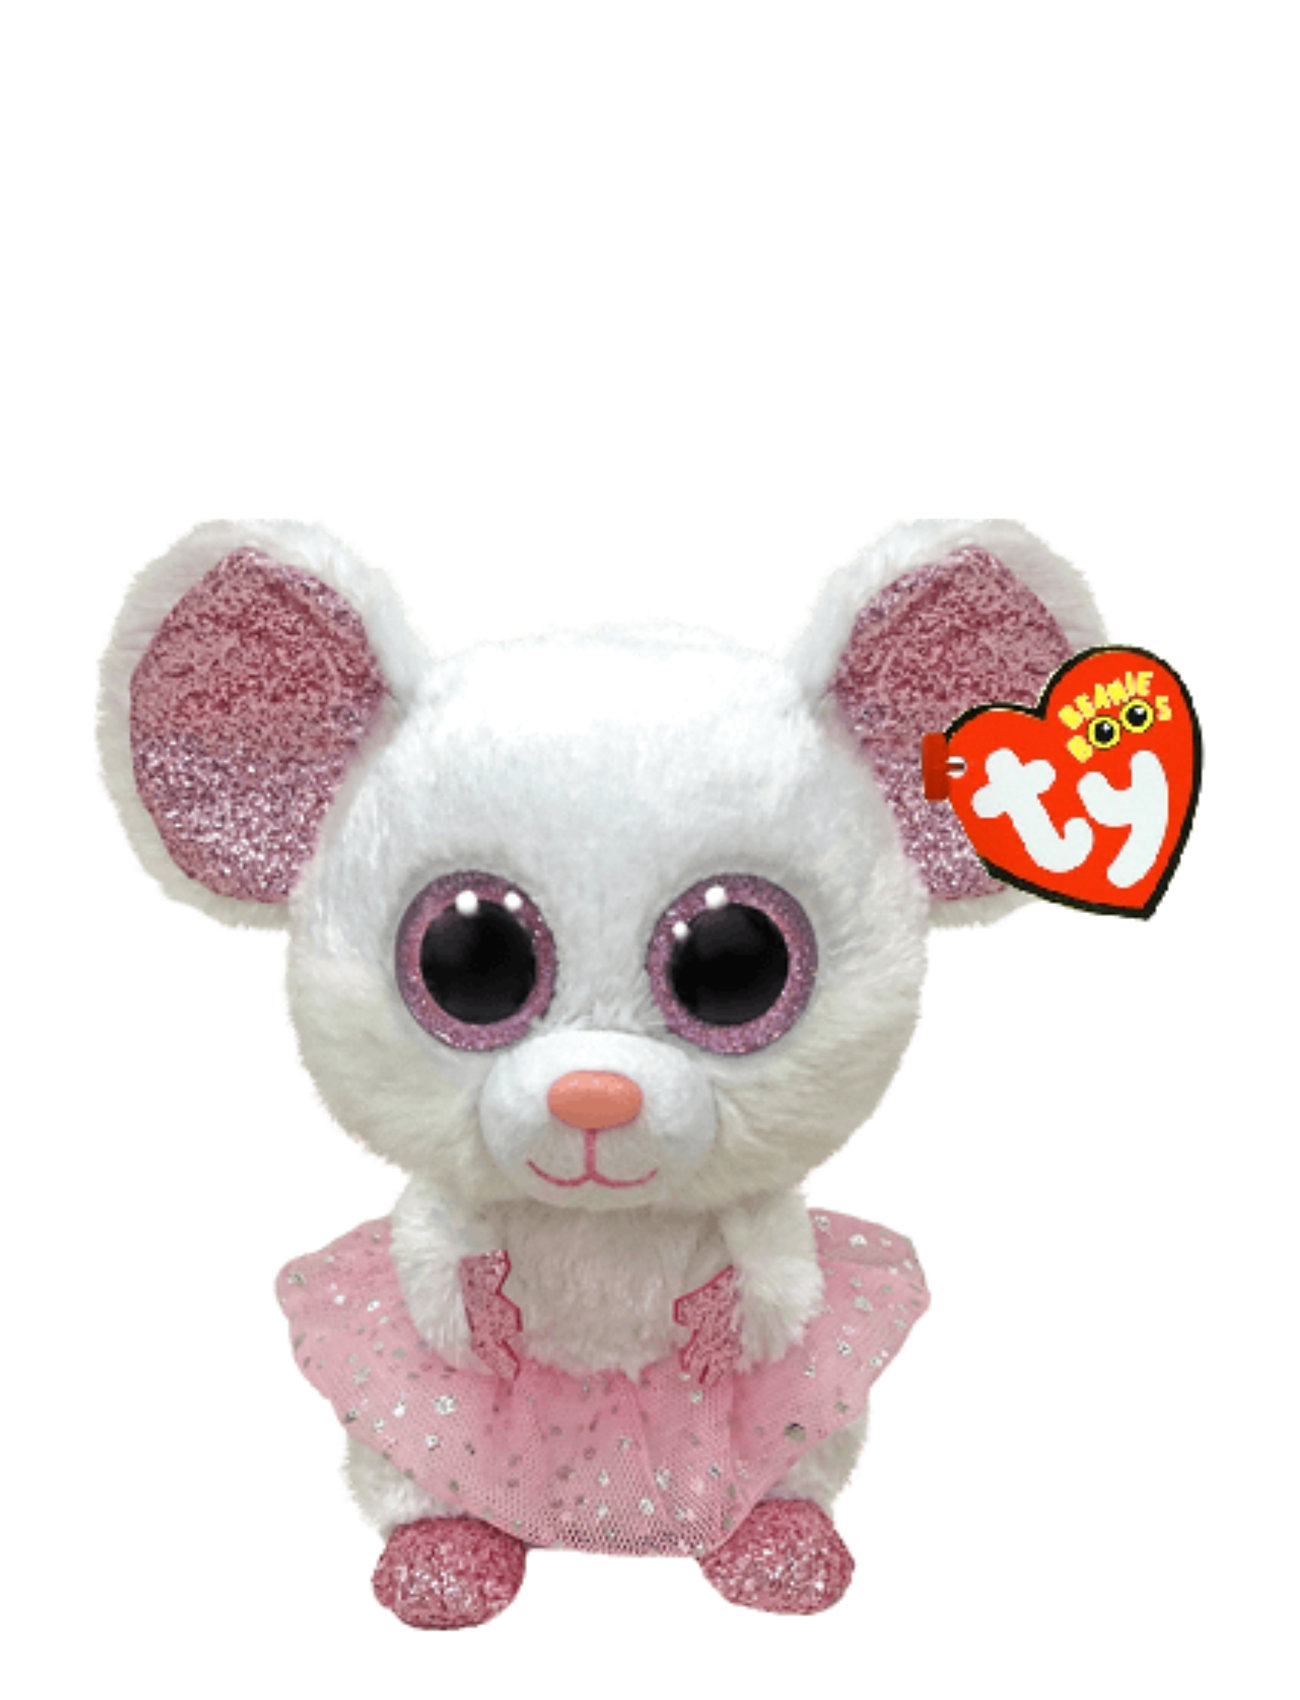 Nina - White Ballerina Mouse Med Toys Soft Toys Stuffed Animals White TY